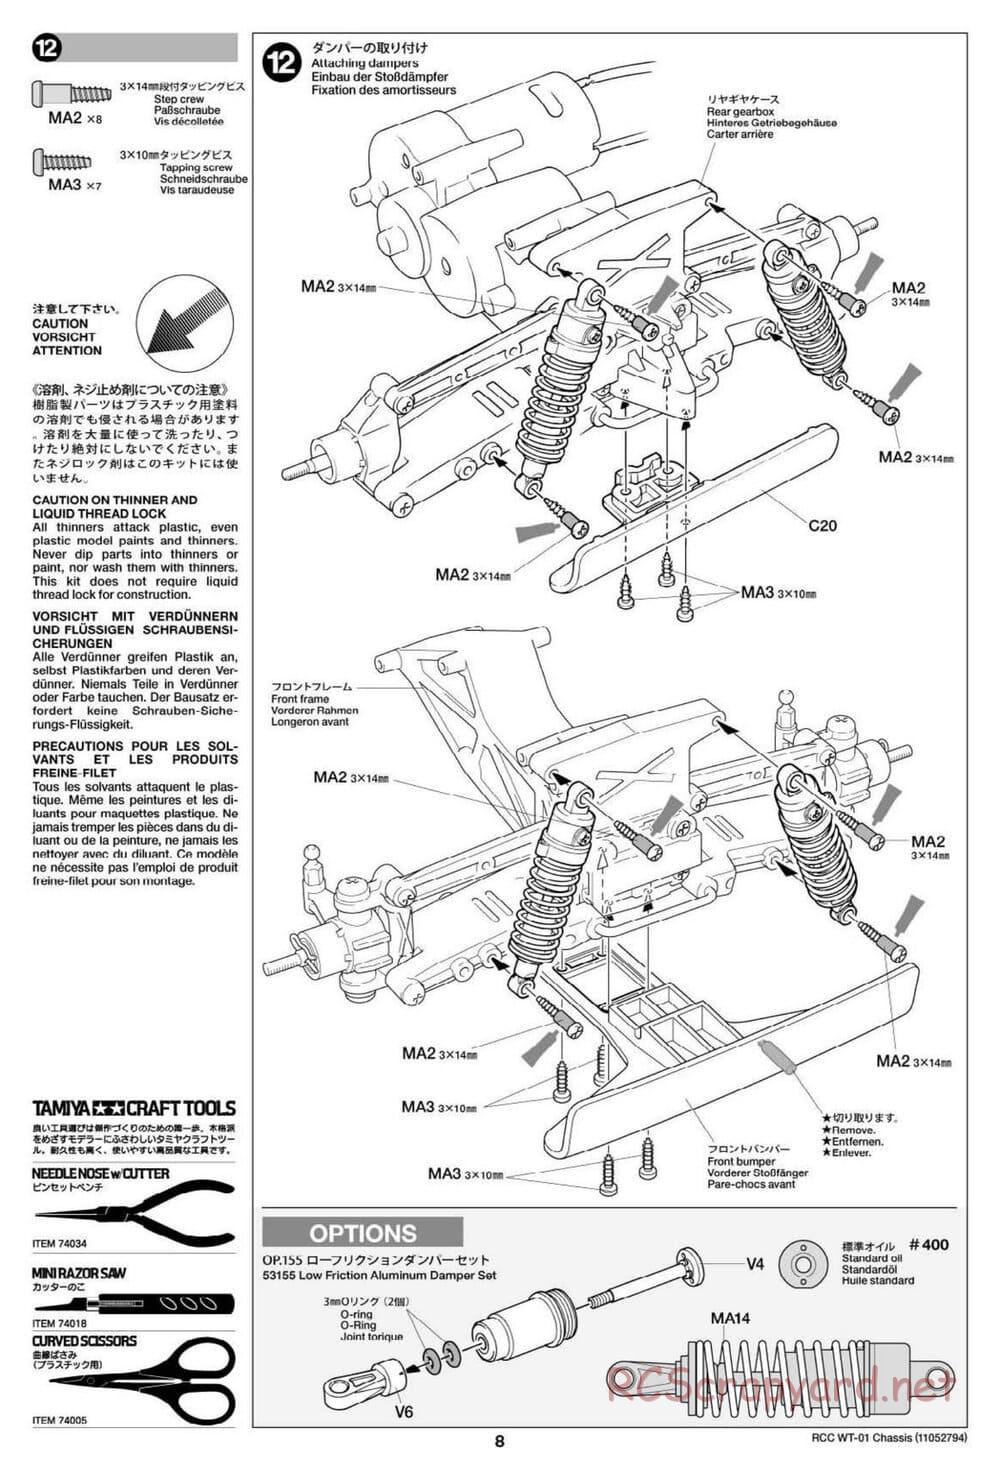 Tamiya - Mud Blaster II - WT-01 Chassis - Manual - Page 8